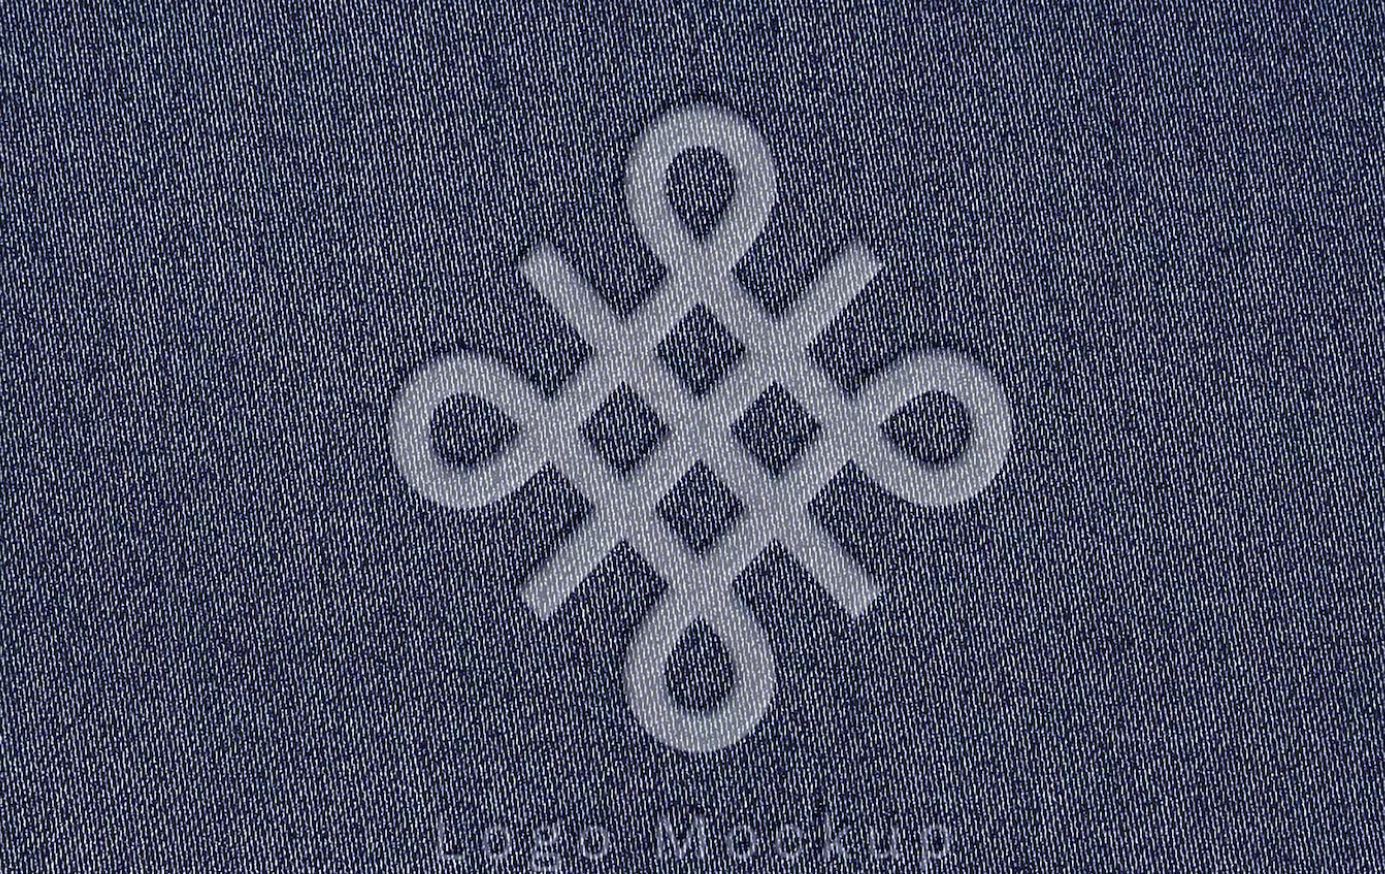 Jeans-Label-Mockup